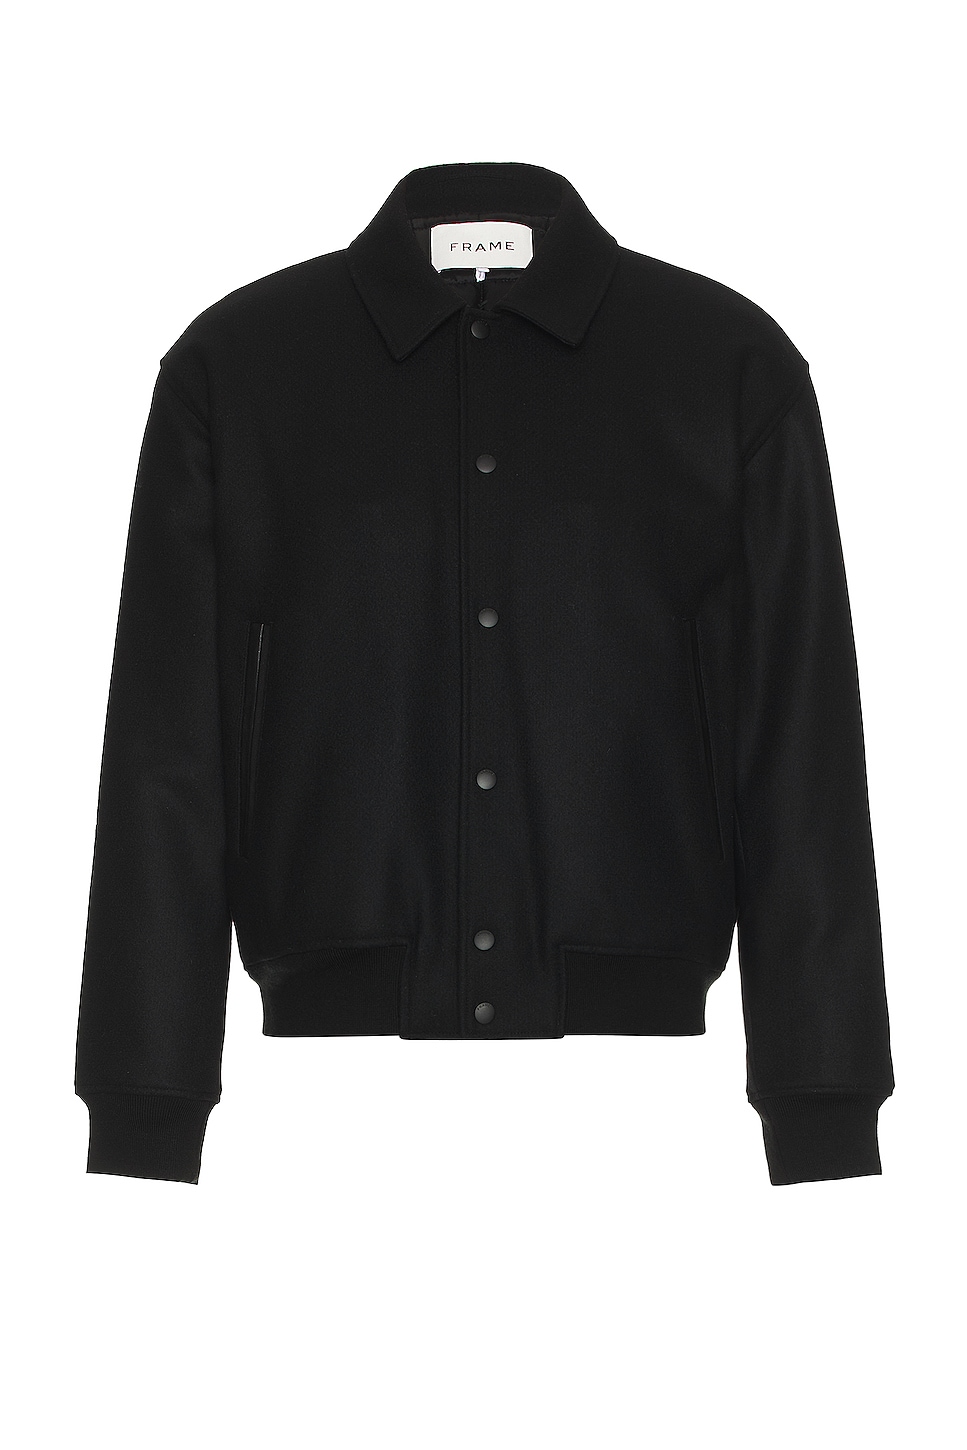 Image 1 of FRAME Varsity Jacket in Black